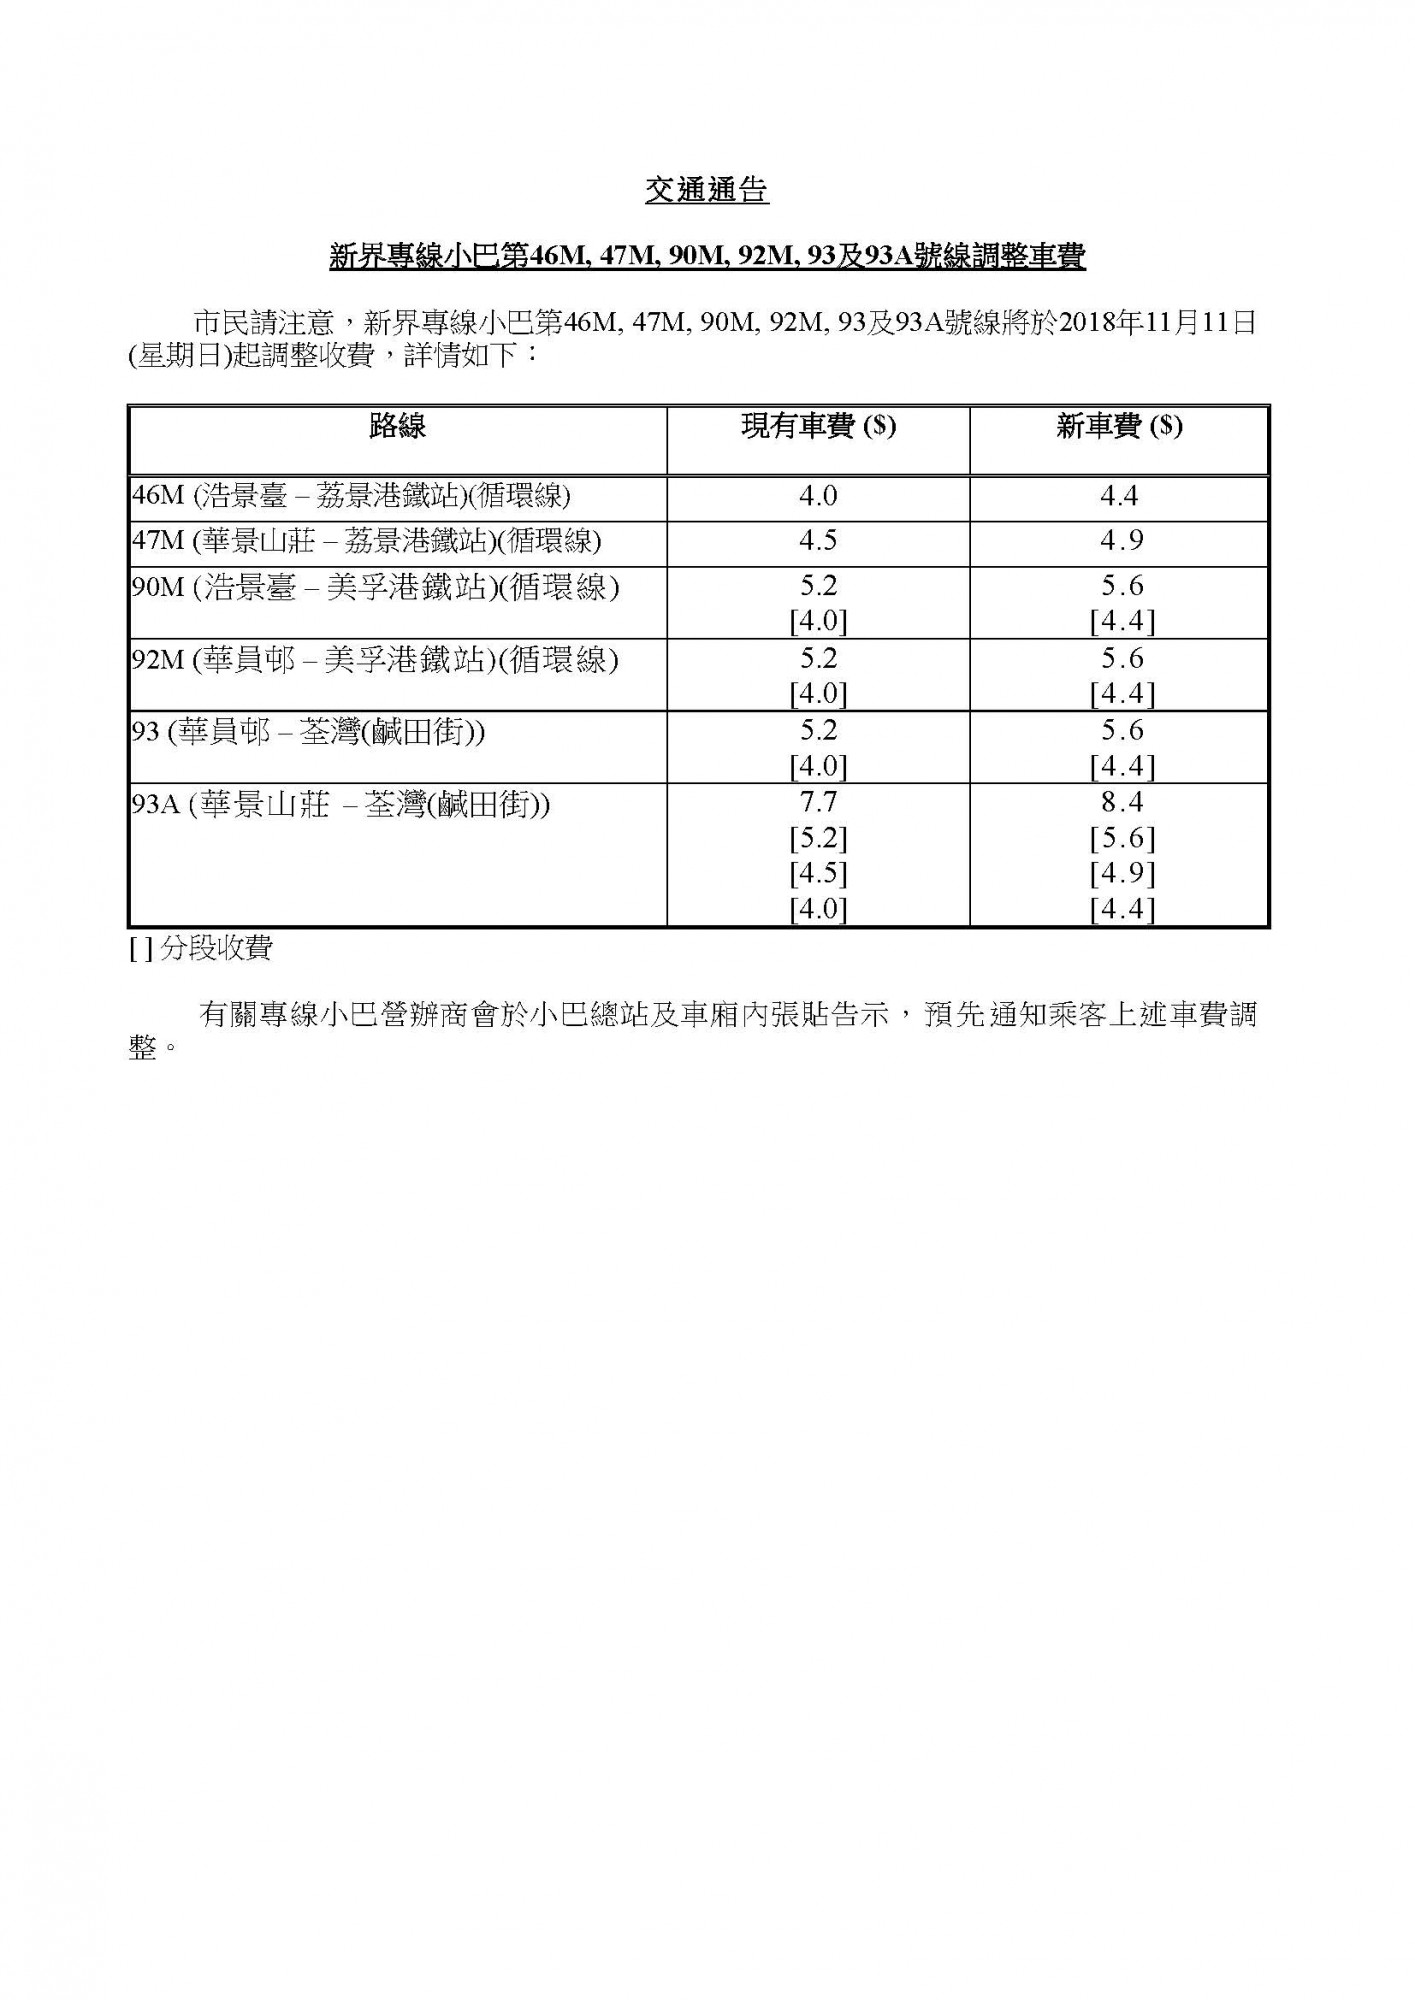 ta_46m series_fare increase_20181111 (chi).jpg